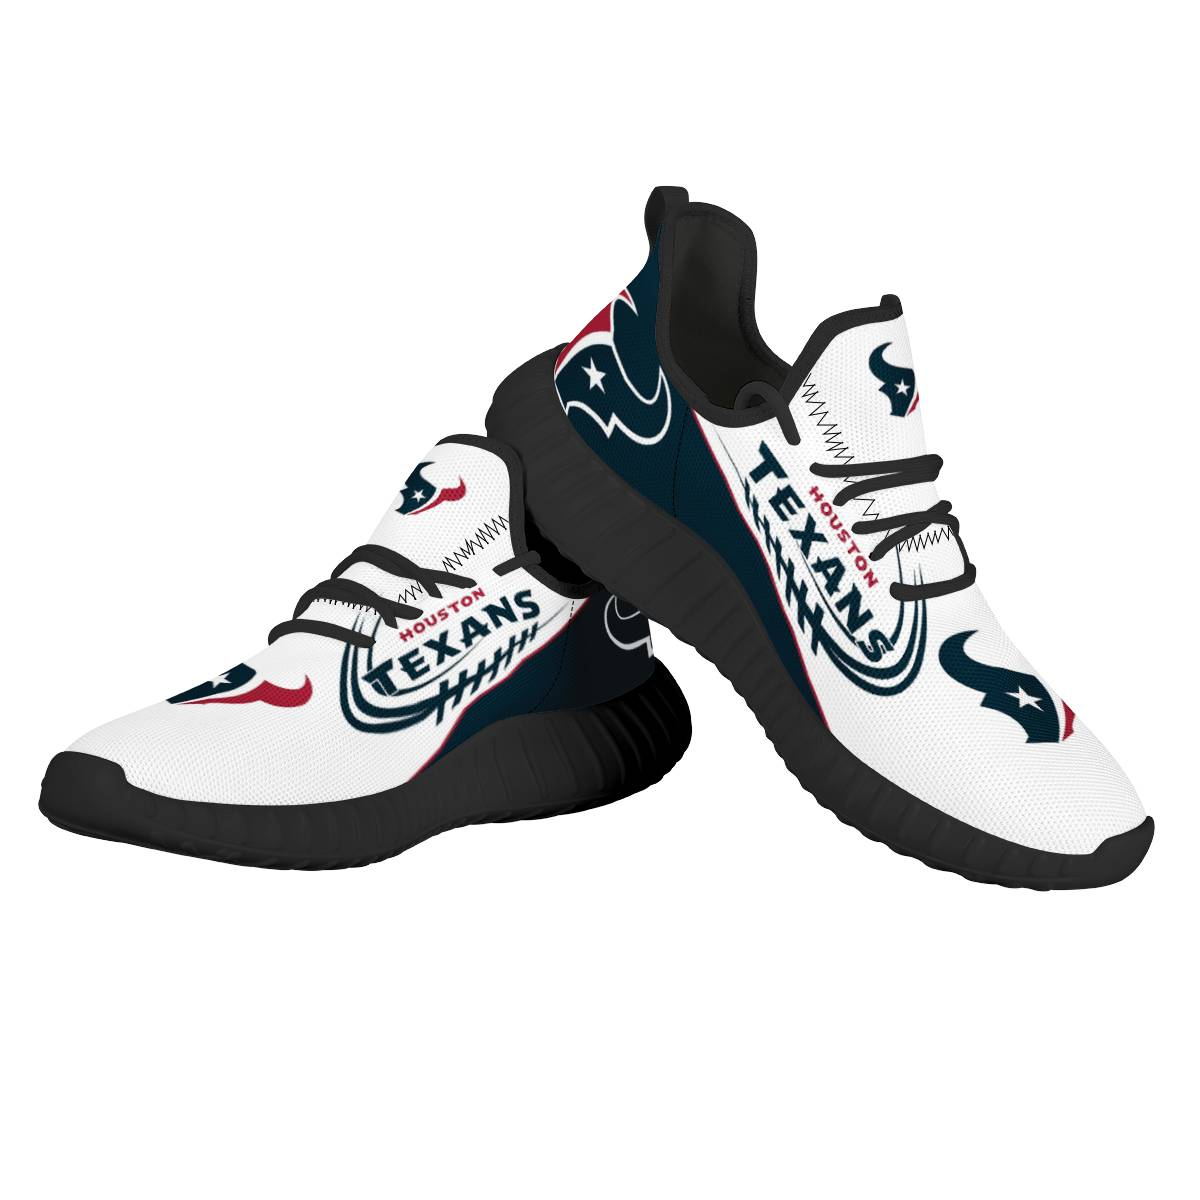 Women's NFL Houston Texans Mesh Knit Sneakers/Shoes 004